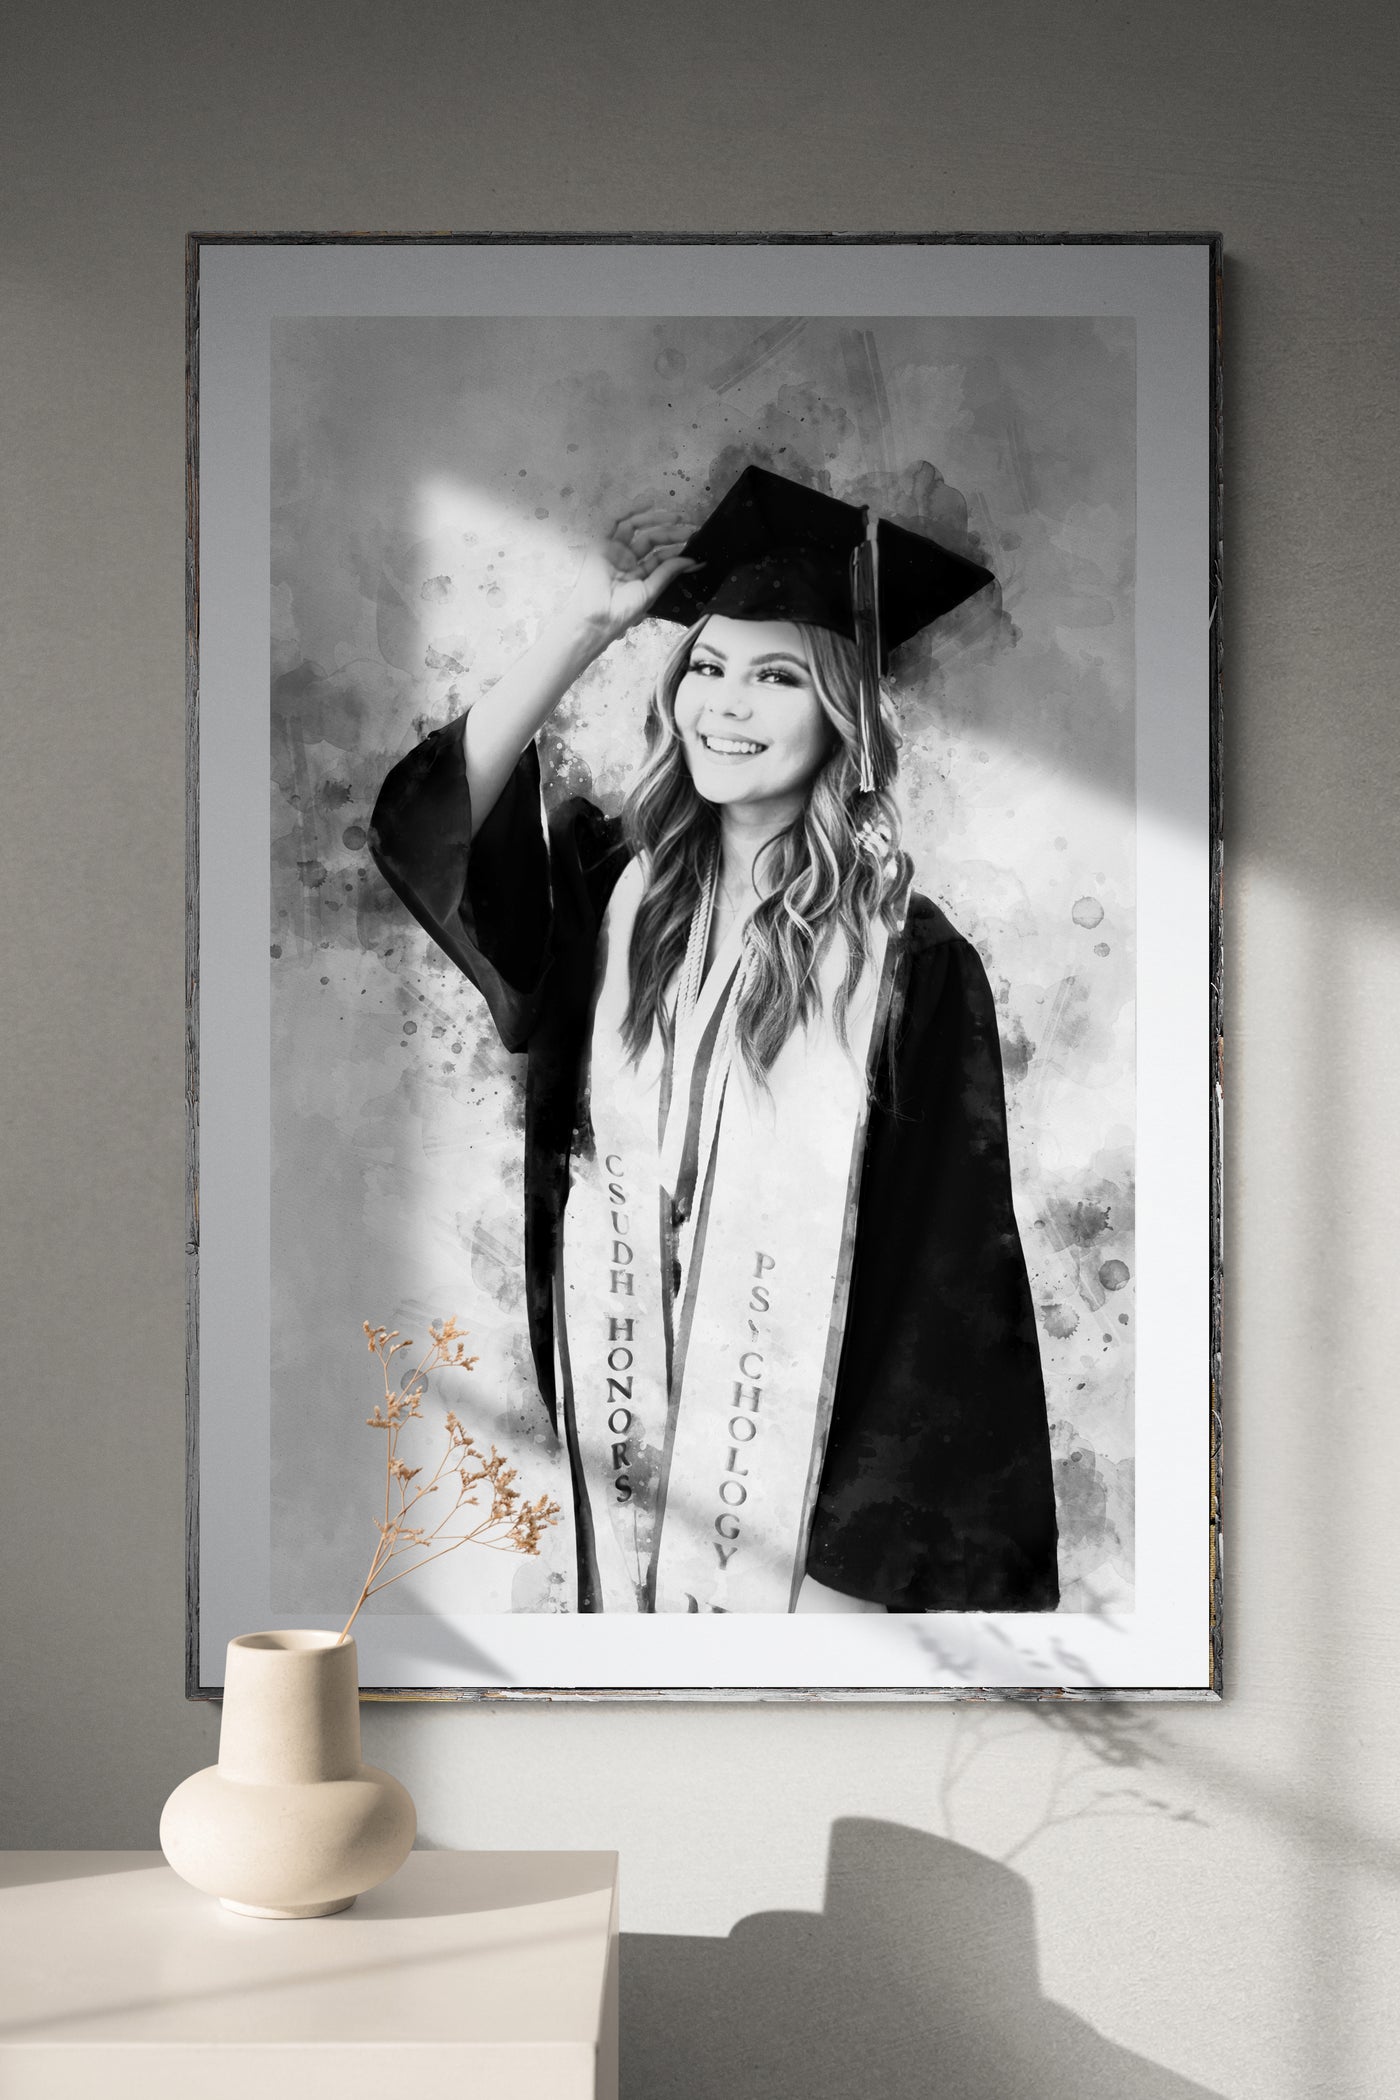 Daughter's graduation Black and white portrait